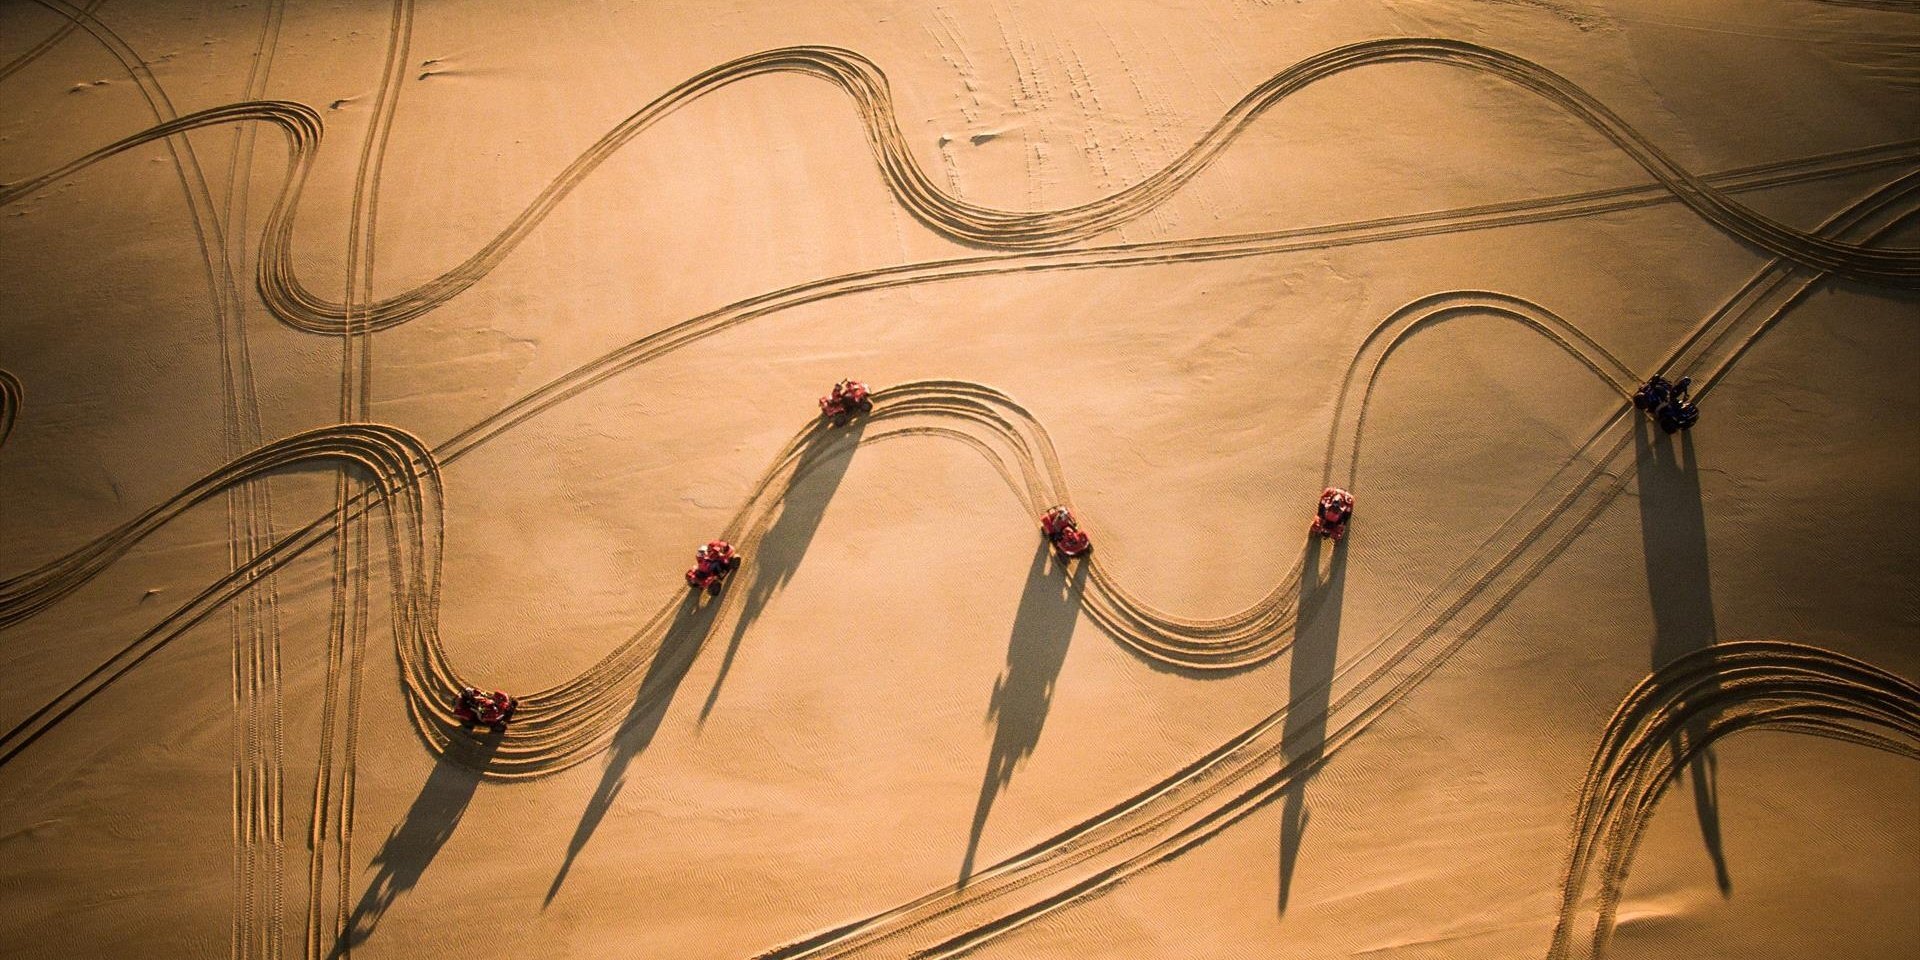 Aeriel shot of quad-bikes and tracks in sand dunes